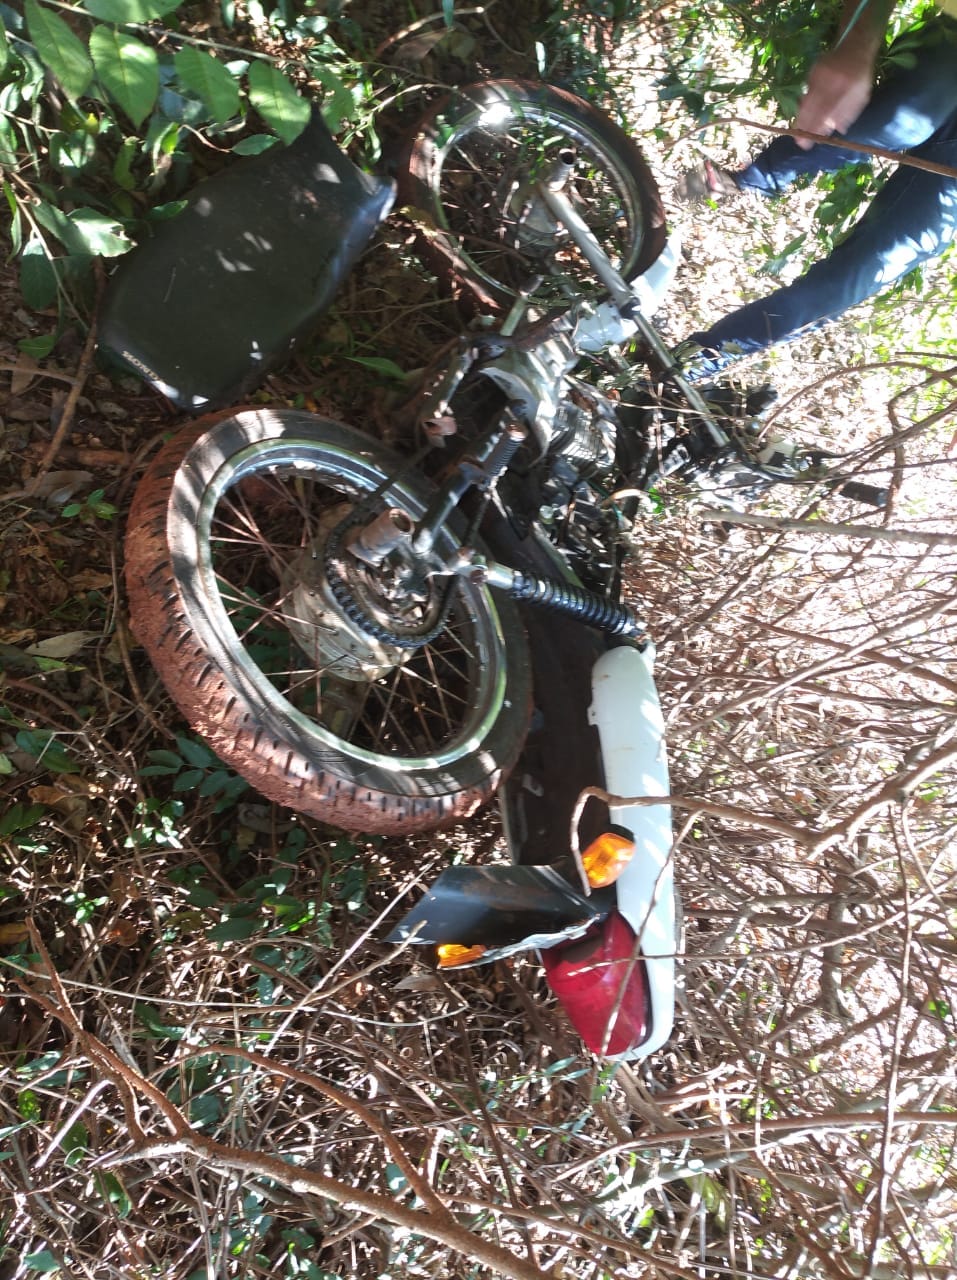 Policia Militar de Campina da Lagoa recupera moto furtada